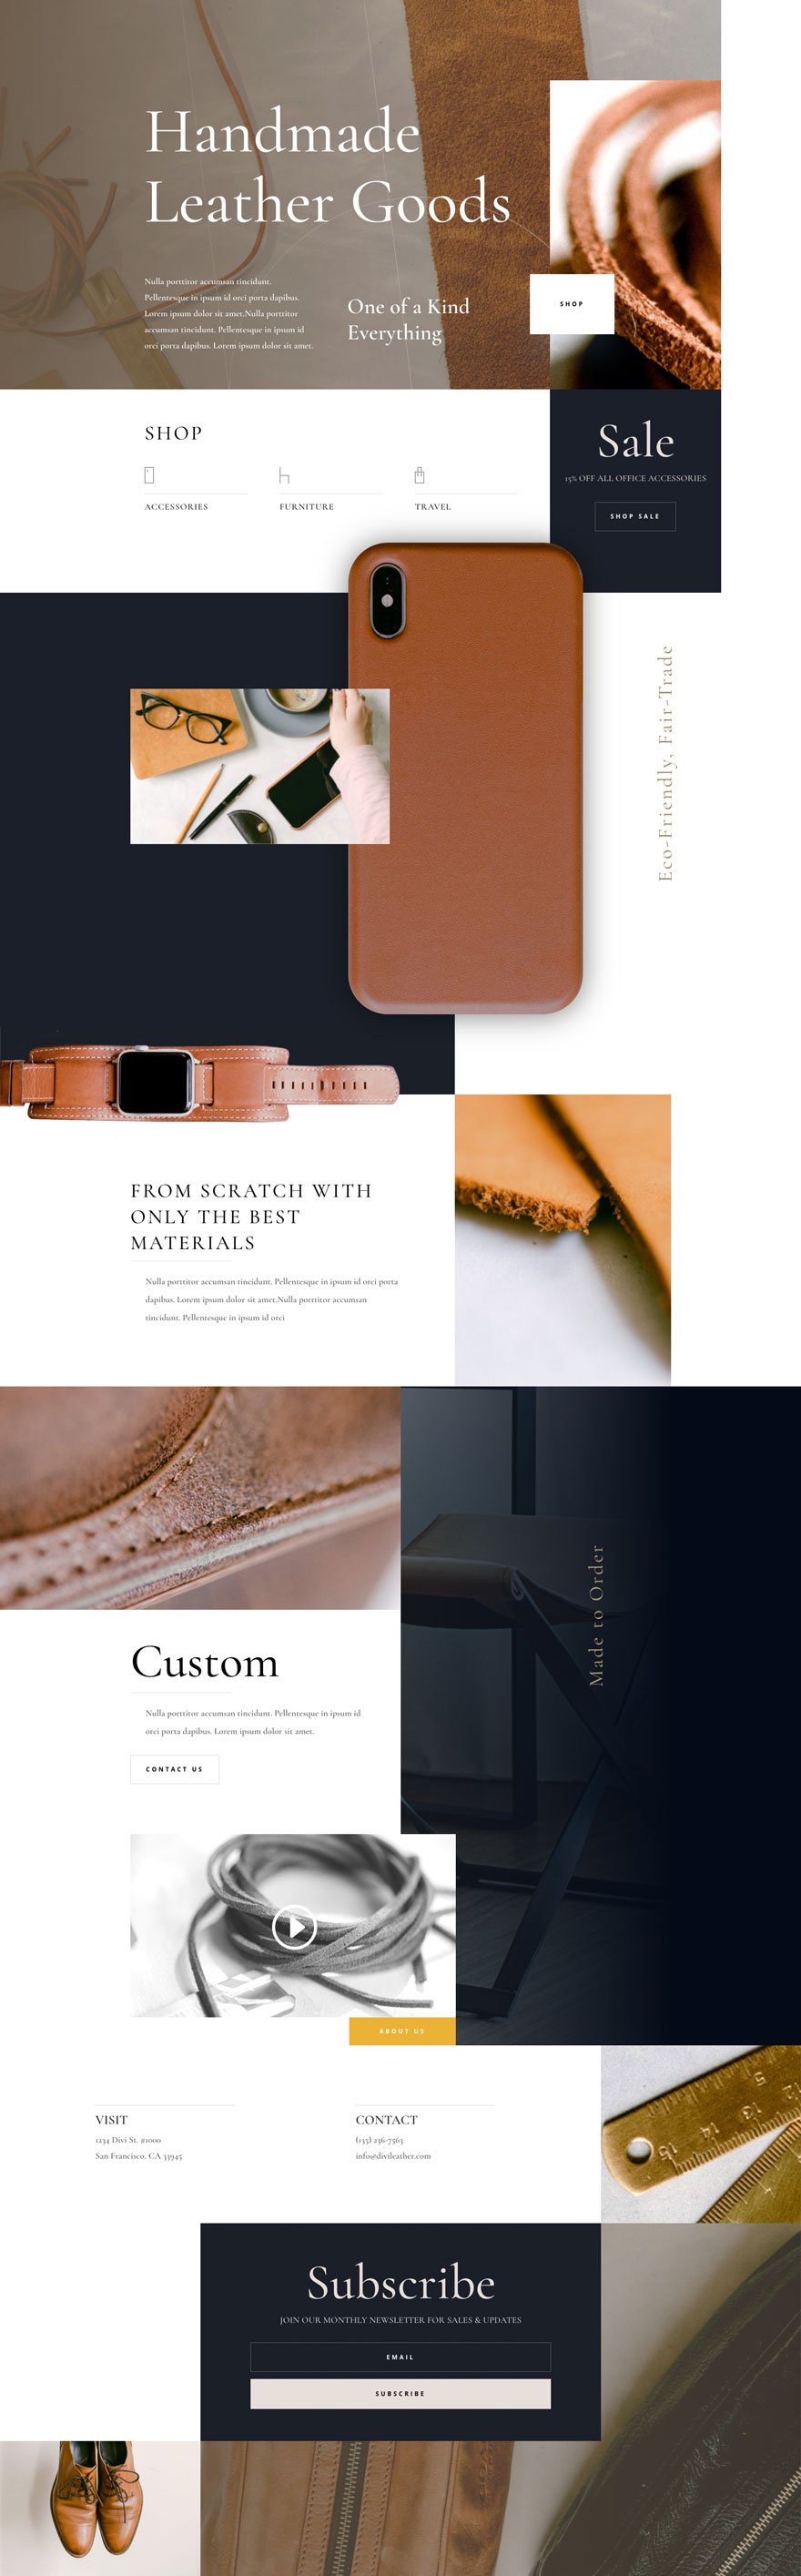 https://www.elegantthemes.com/layouts/wp-content/uploads/2020/04/leather-company-landing-page.jpg